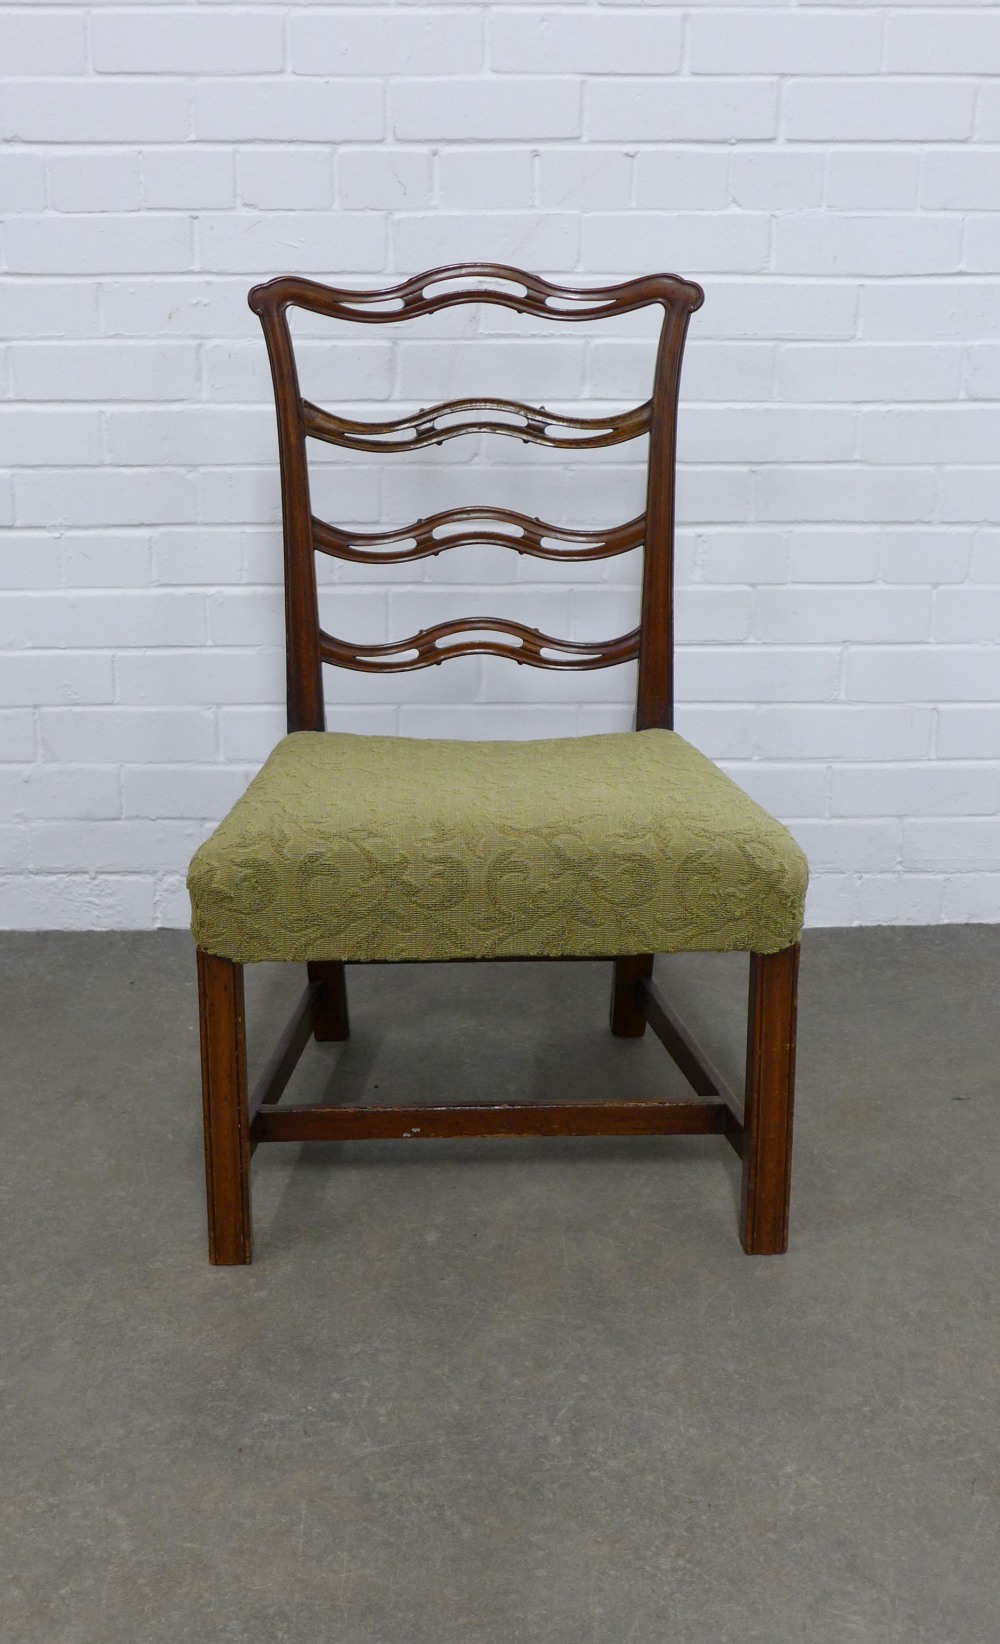 19th century mahogany ladderback side chair, 55 x 87 x 48cm. - Image 2 of 2